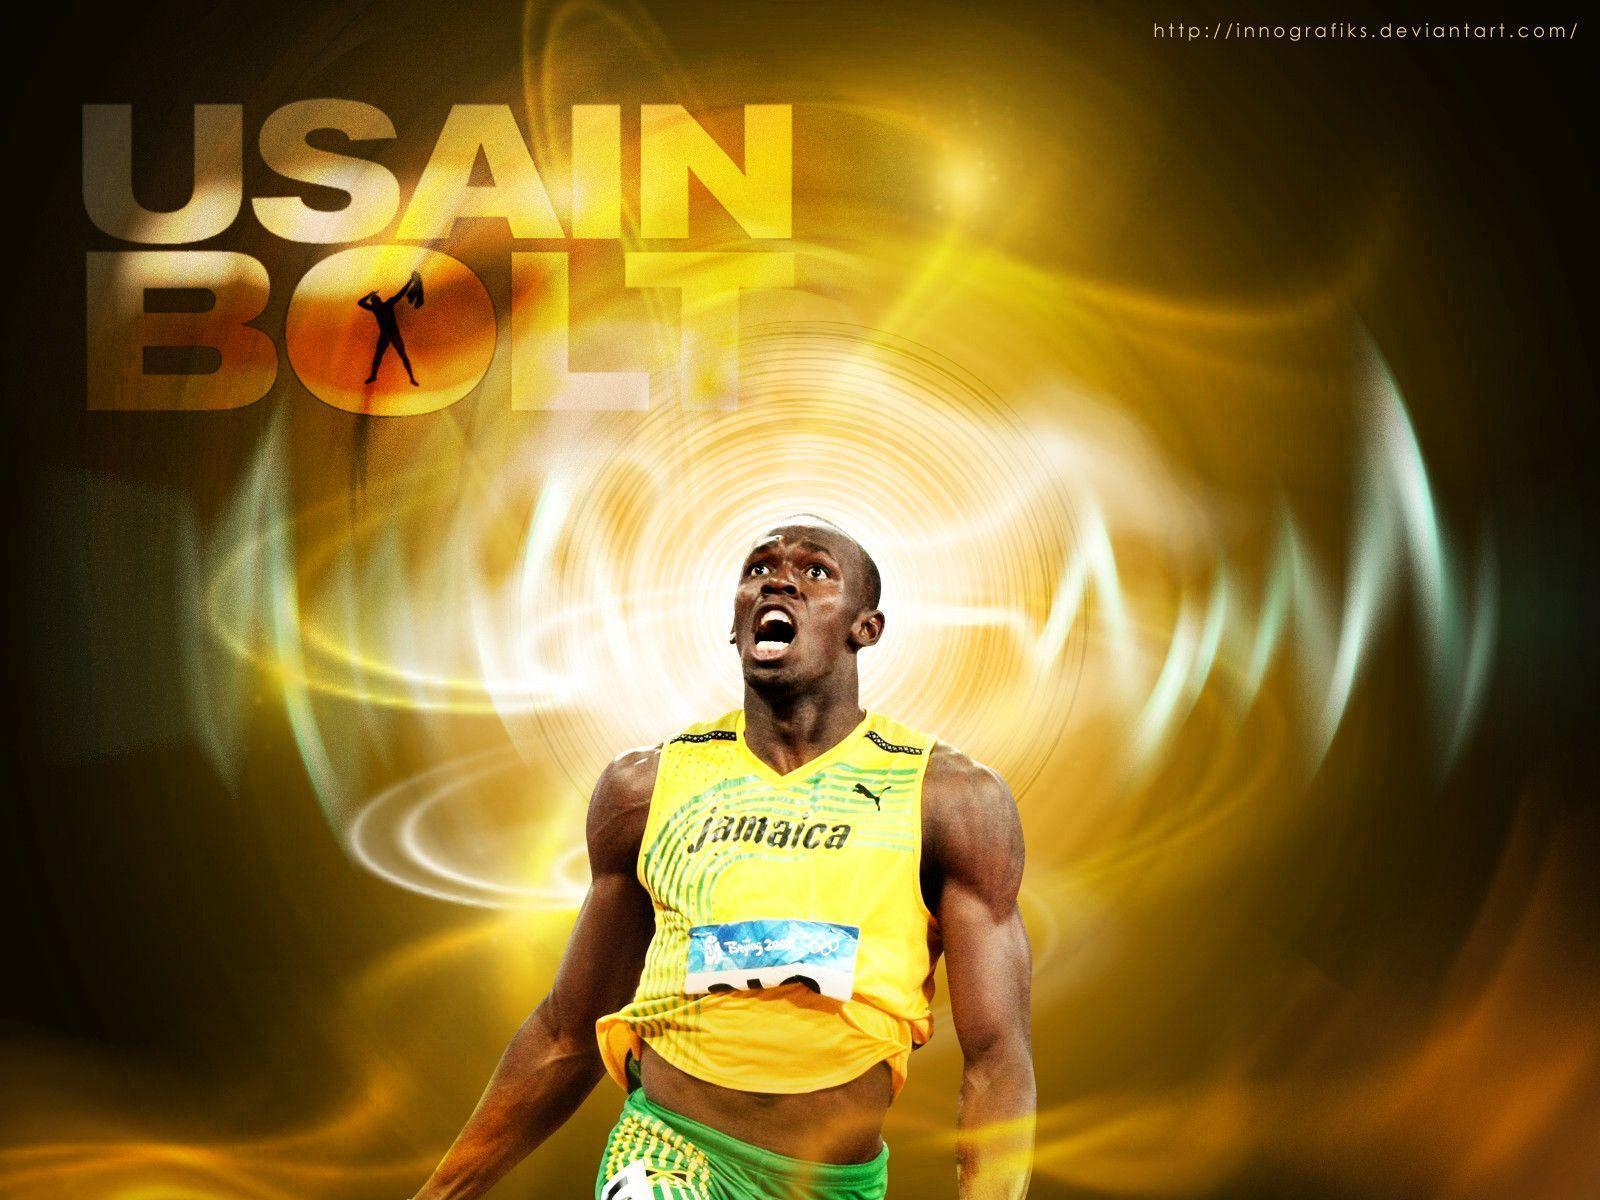 Fondos de pantalla de Usain Bolt. Wallpaper de Usain Bolt